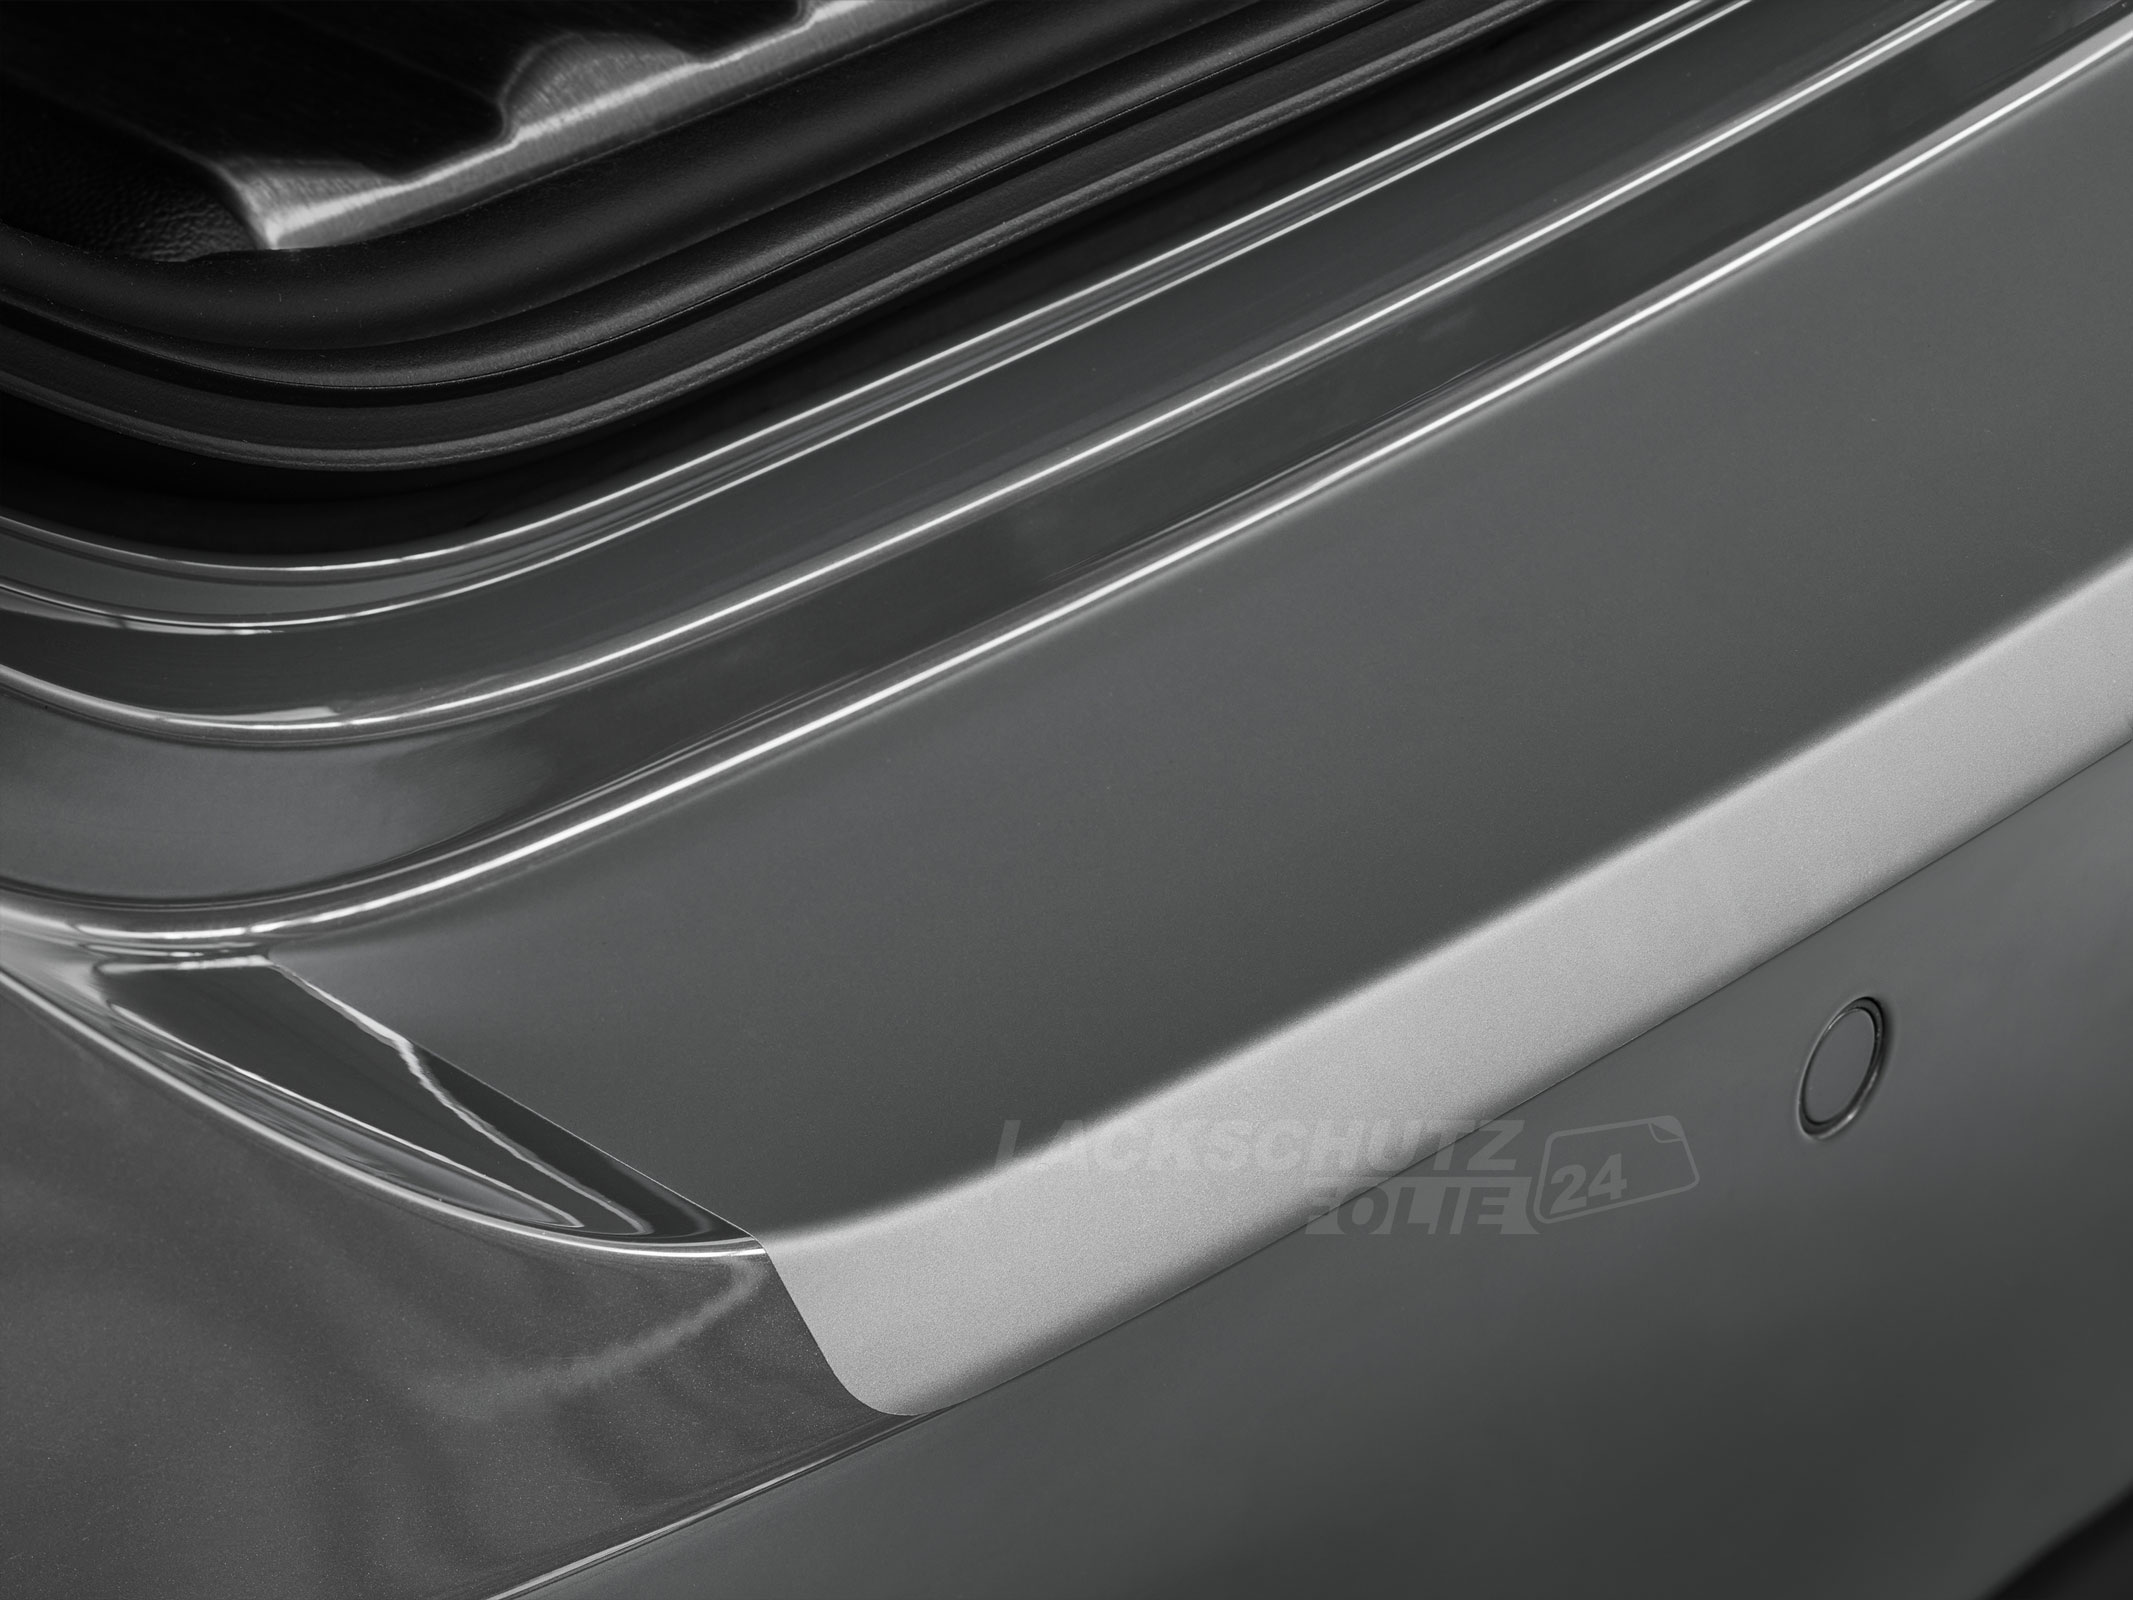 Ladekantenschutzfolie - Transparent Glatt MATT 110 µm stark  für Tesla Model S ab BJ 07/2012 + Facelift-Modelle